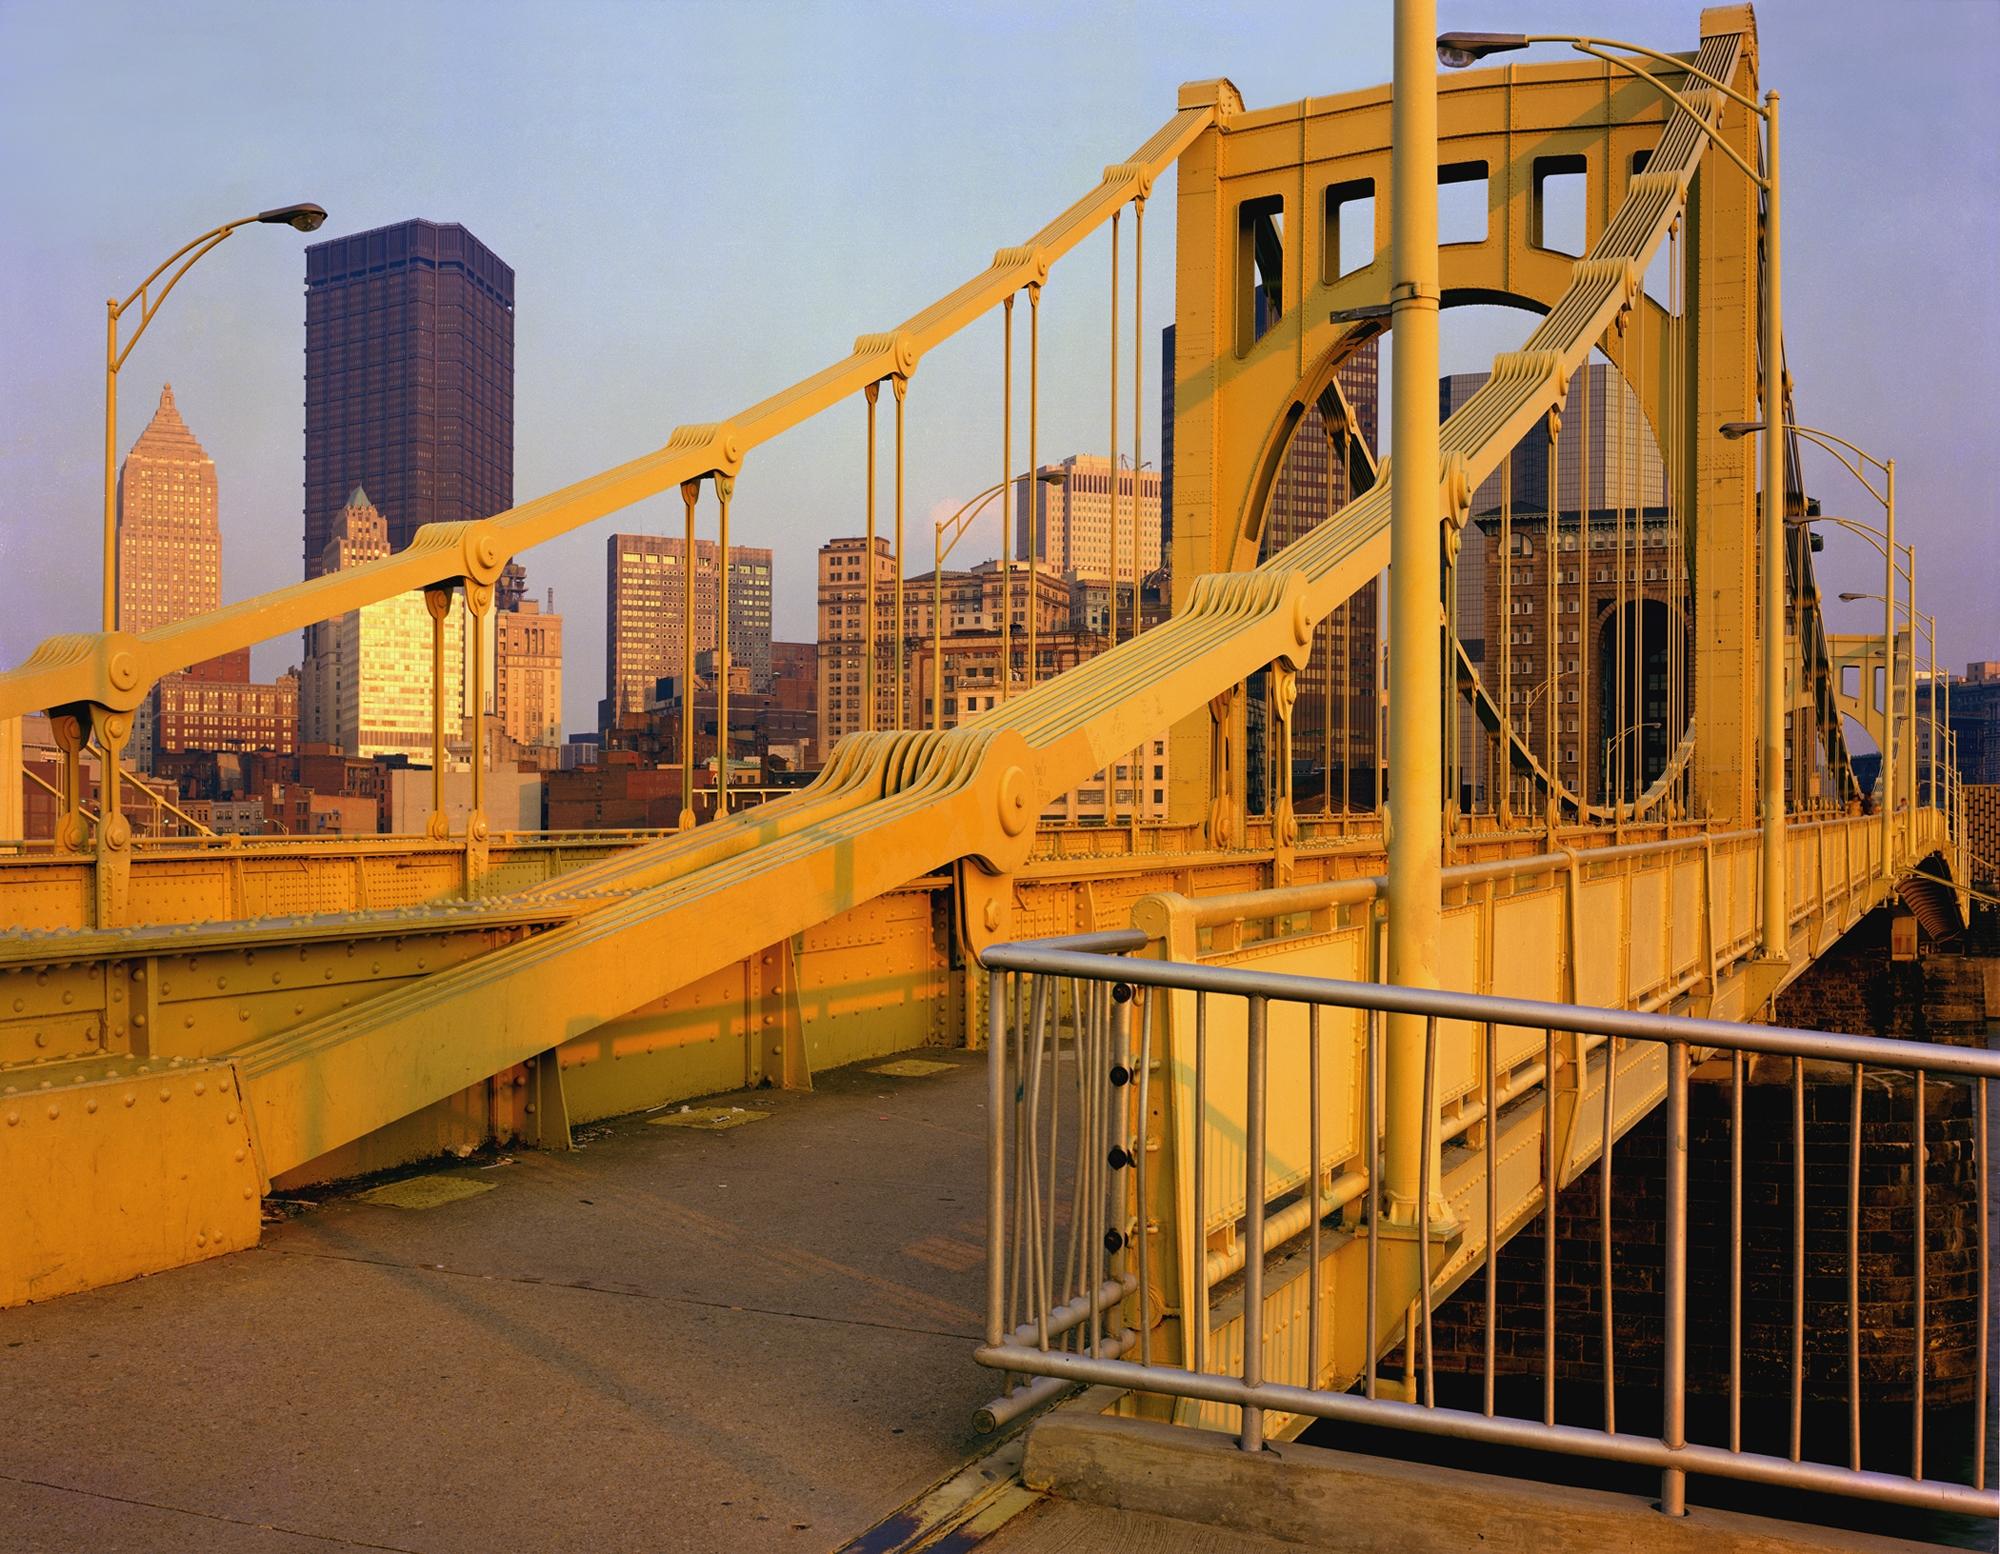 Joel Degrand Color Photograph - 6th Street Bridge, Pittsburgh, PA, Photograph, Archival Ink Jet